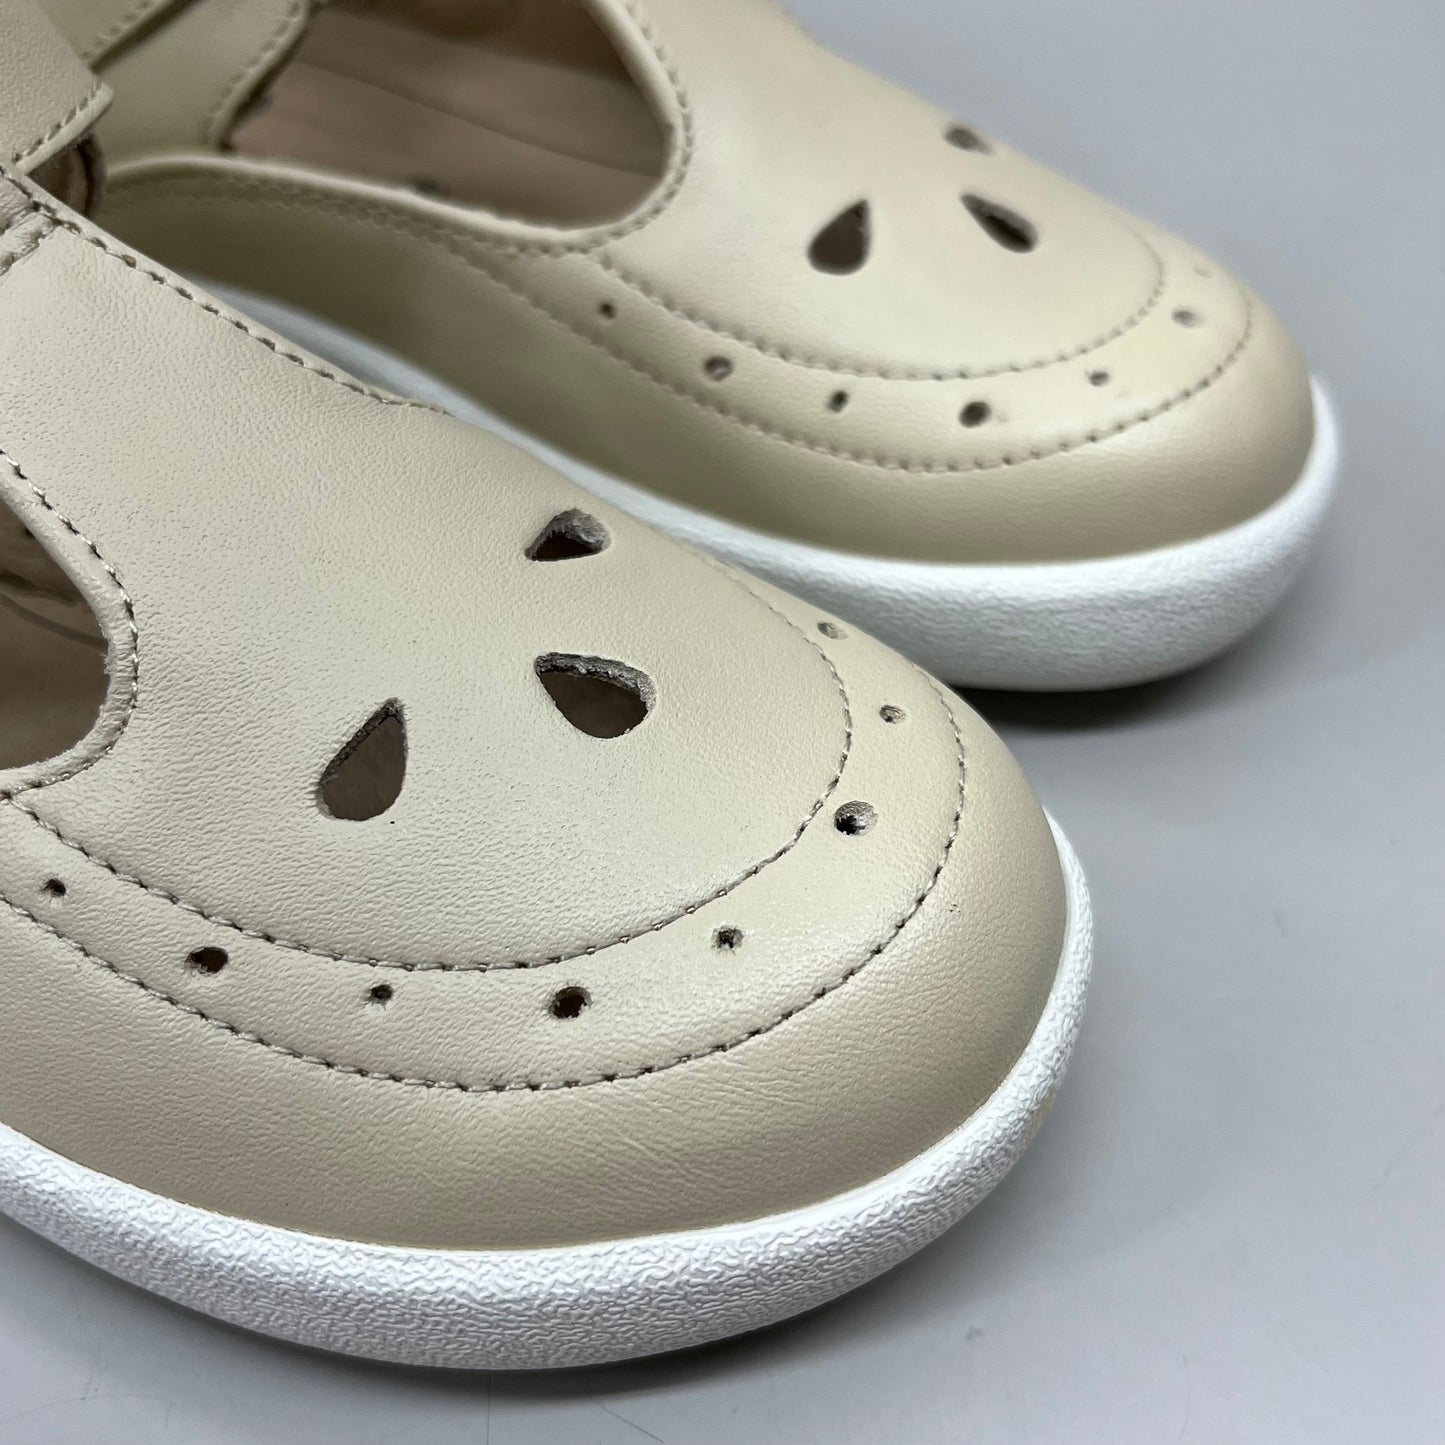 OLD SOLES Royal Adjustable T Strap Leather Shoe Kid's Sz 28 US 11 Cream #5011